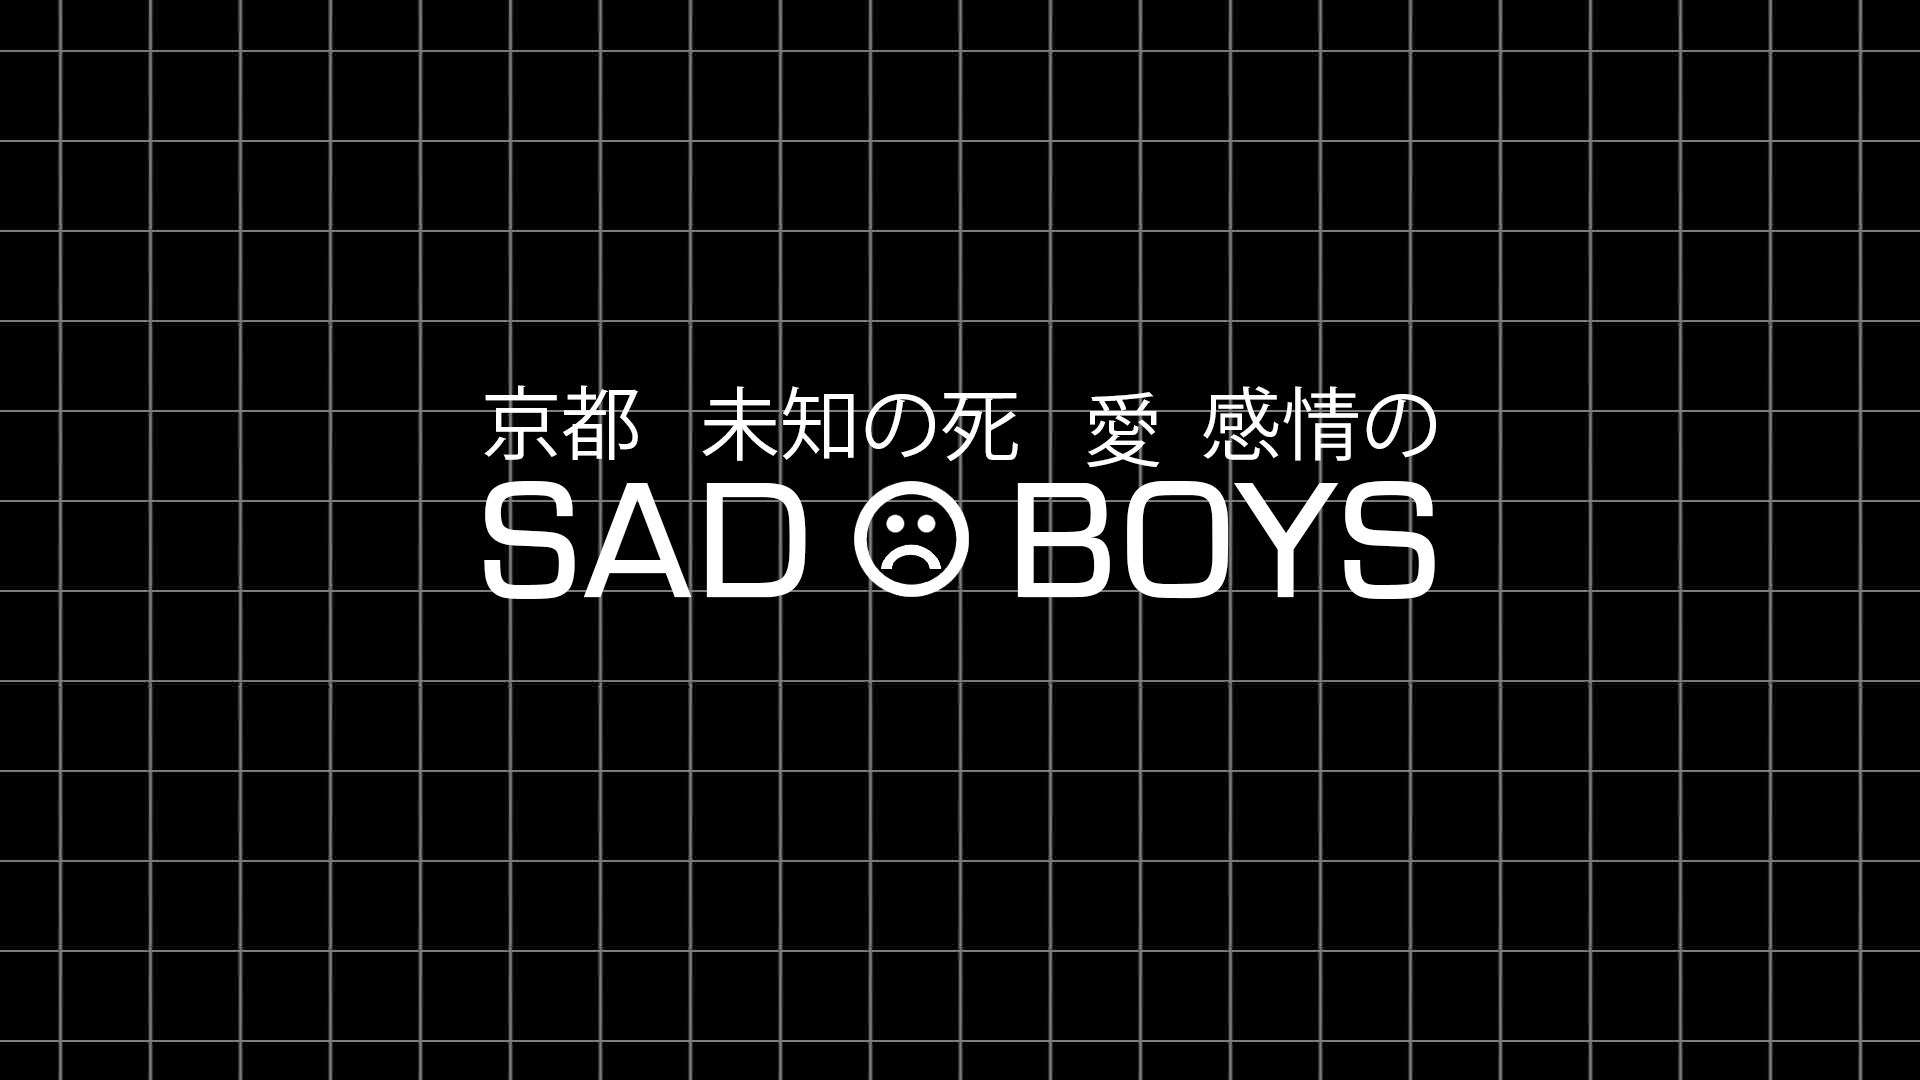 Free Download Sad Boy Wallpapers.